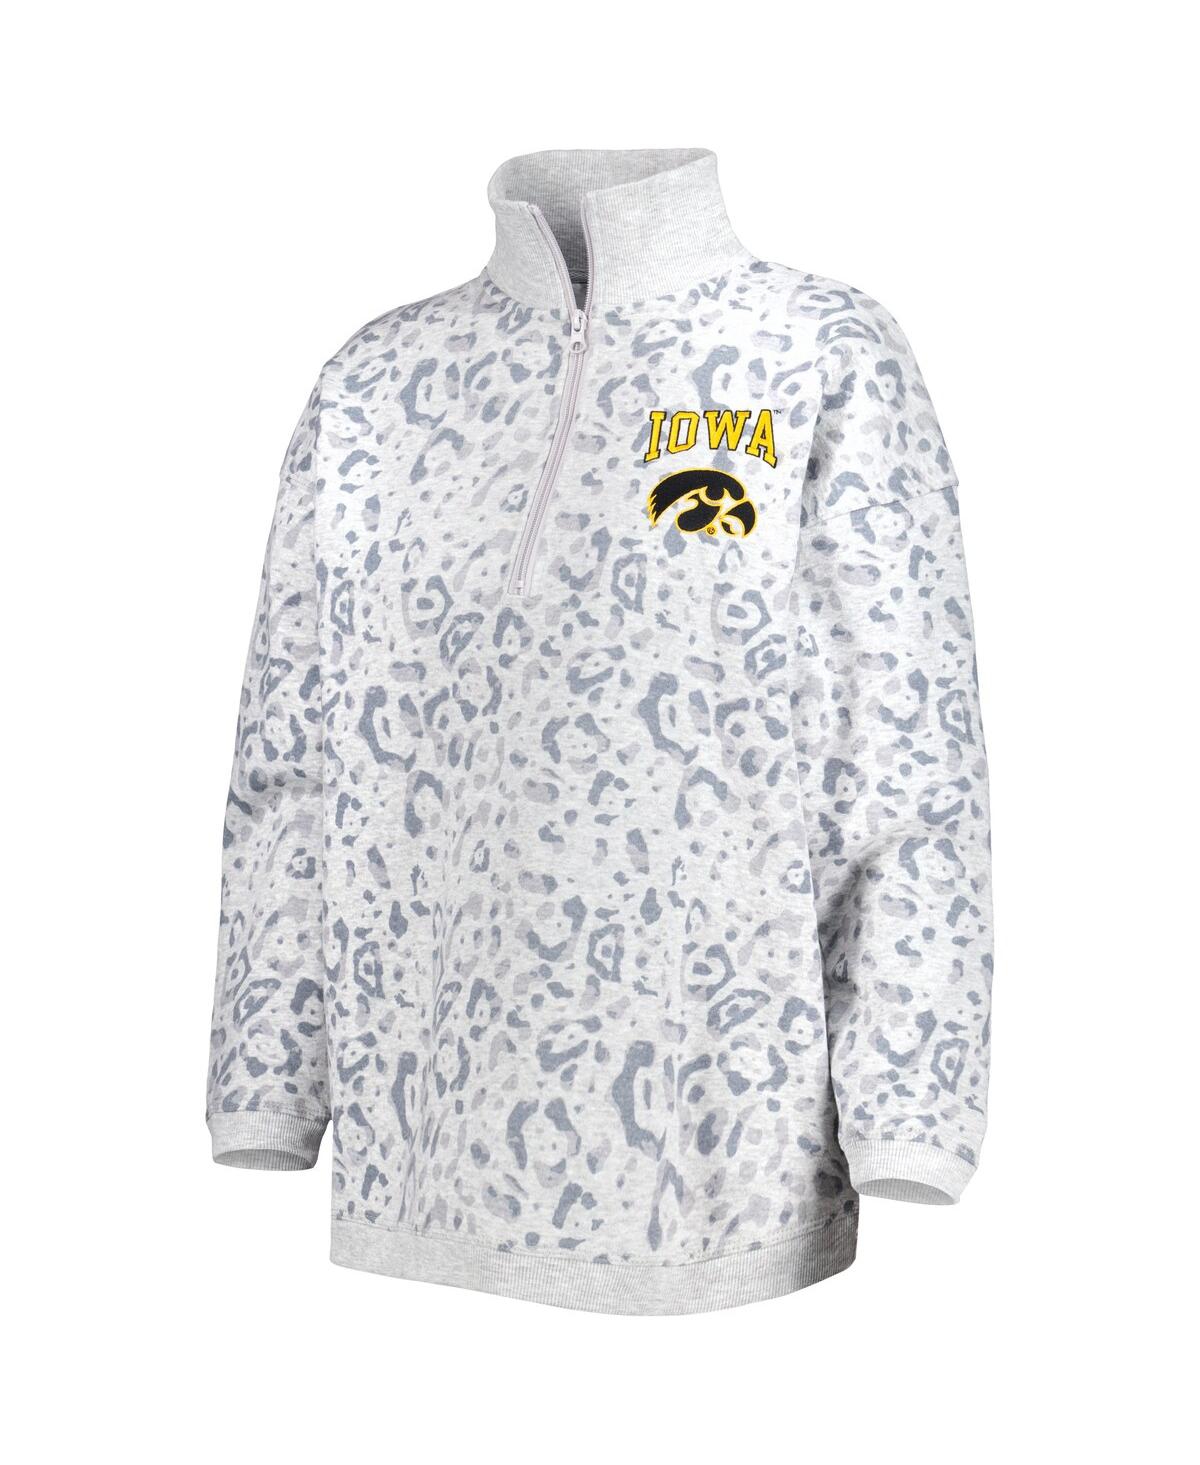 Shop Gameday Couture Women's  Heather Gray Iowa Hawkeyes Leopard Quarter-zip Sweatshirt